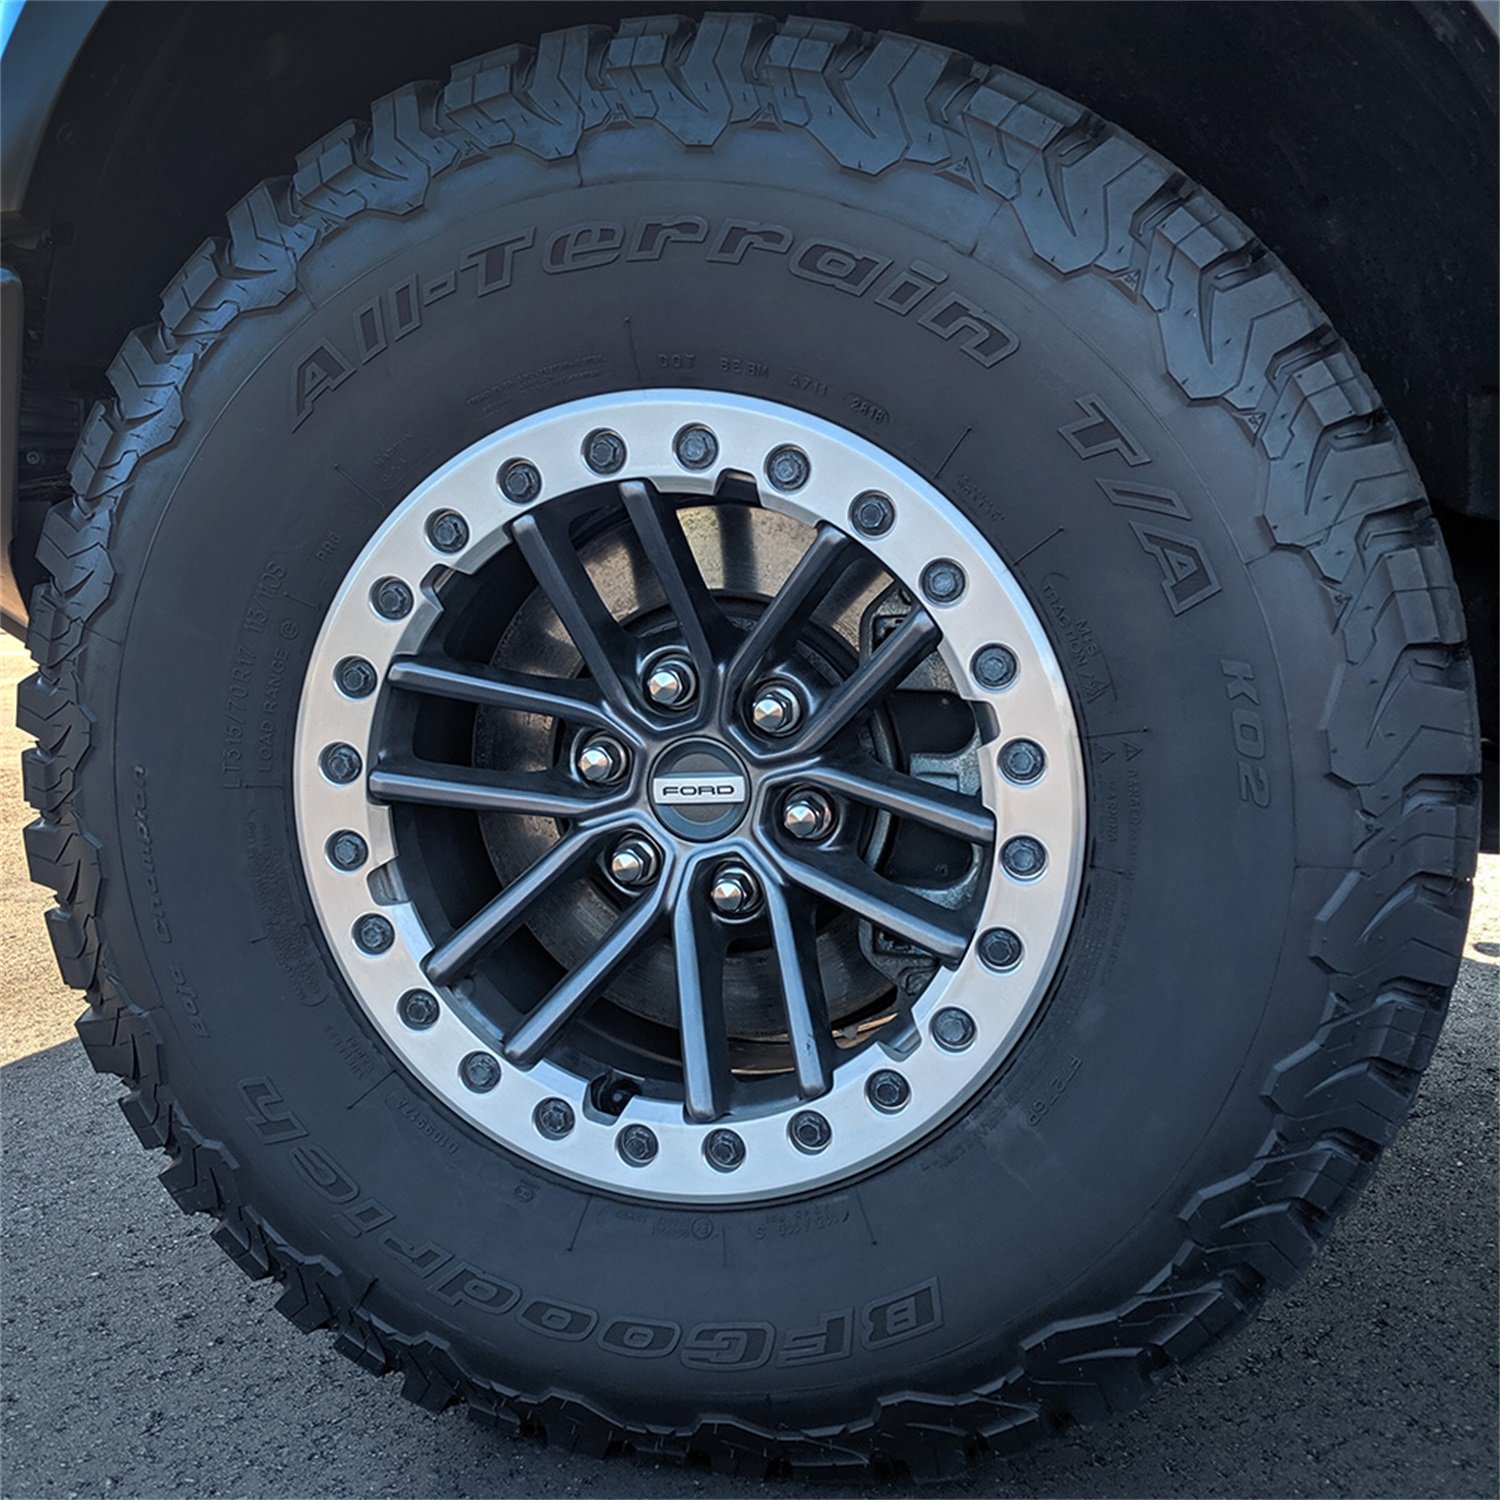 Beadlock Wheel Kit for 2019-2020 Ford RAPTOR [Size: 17" x 8.5"]